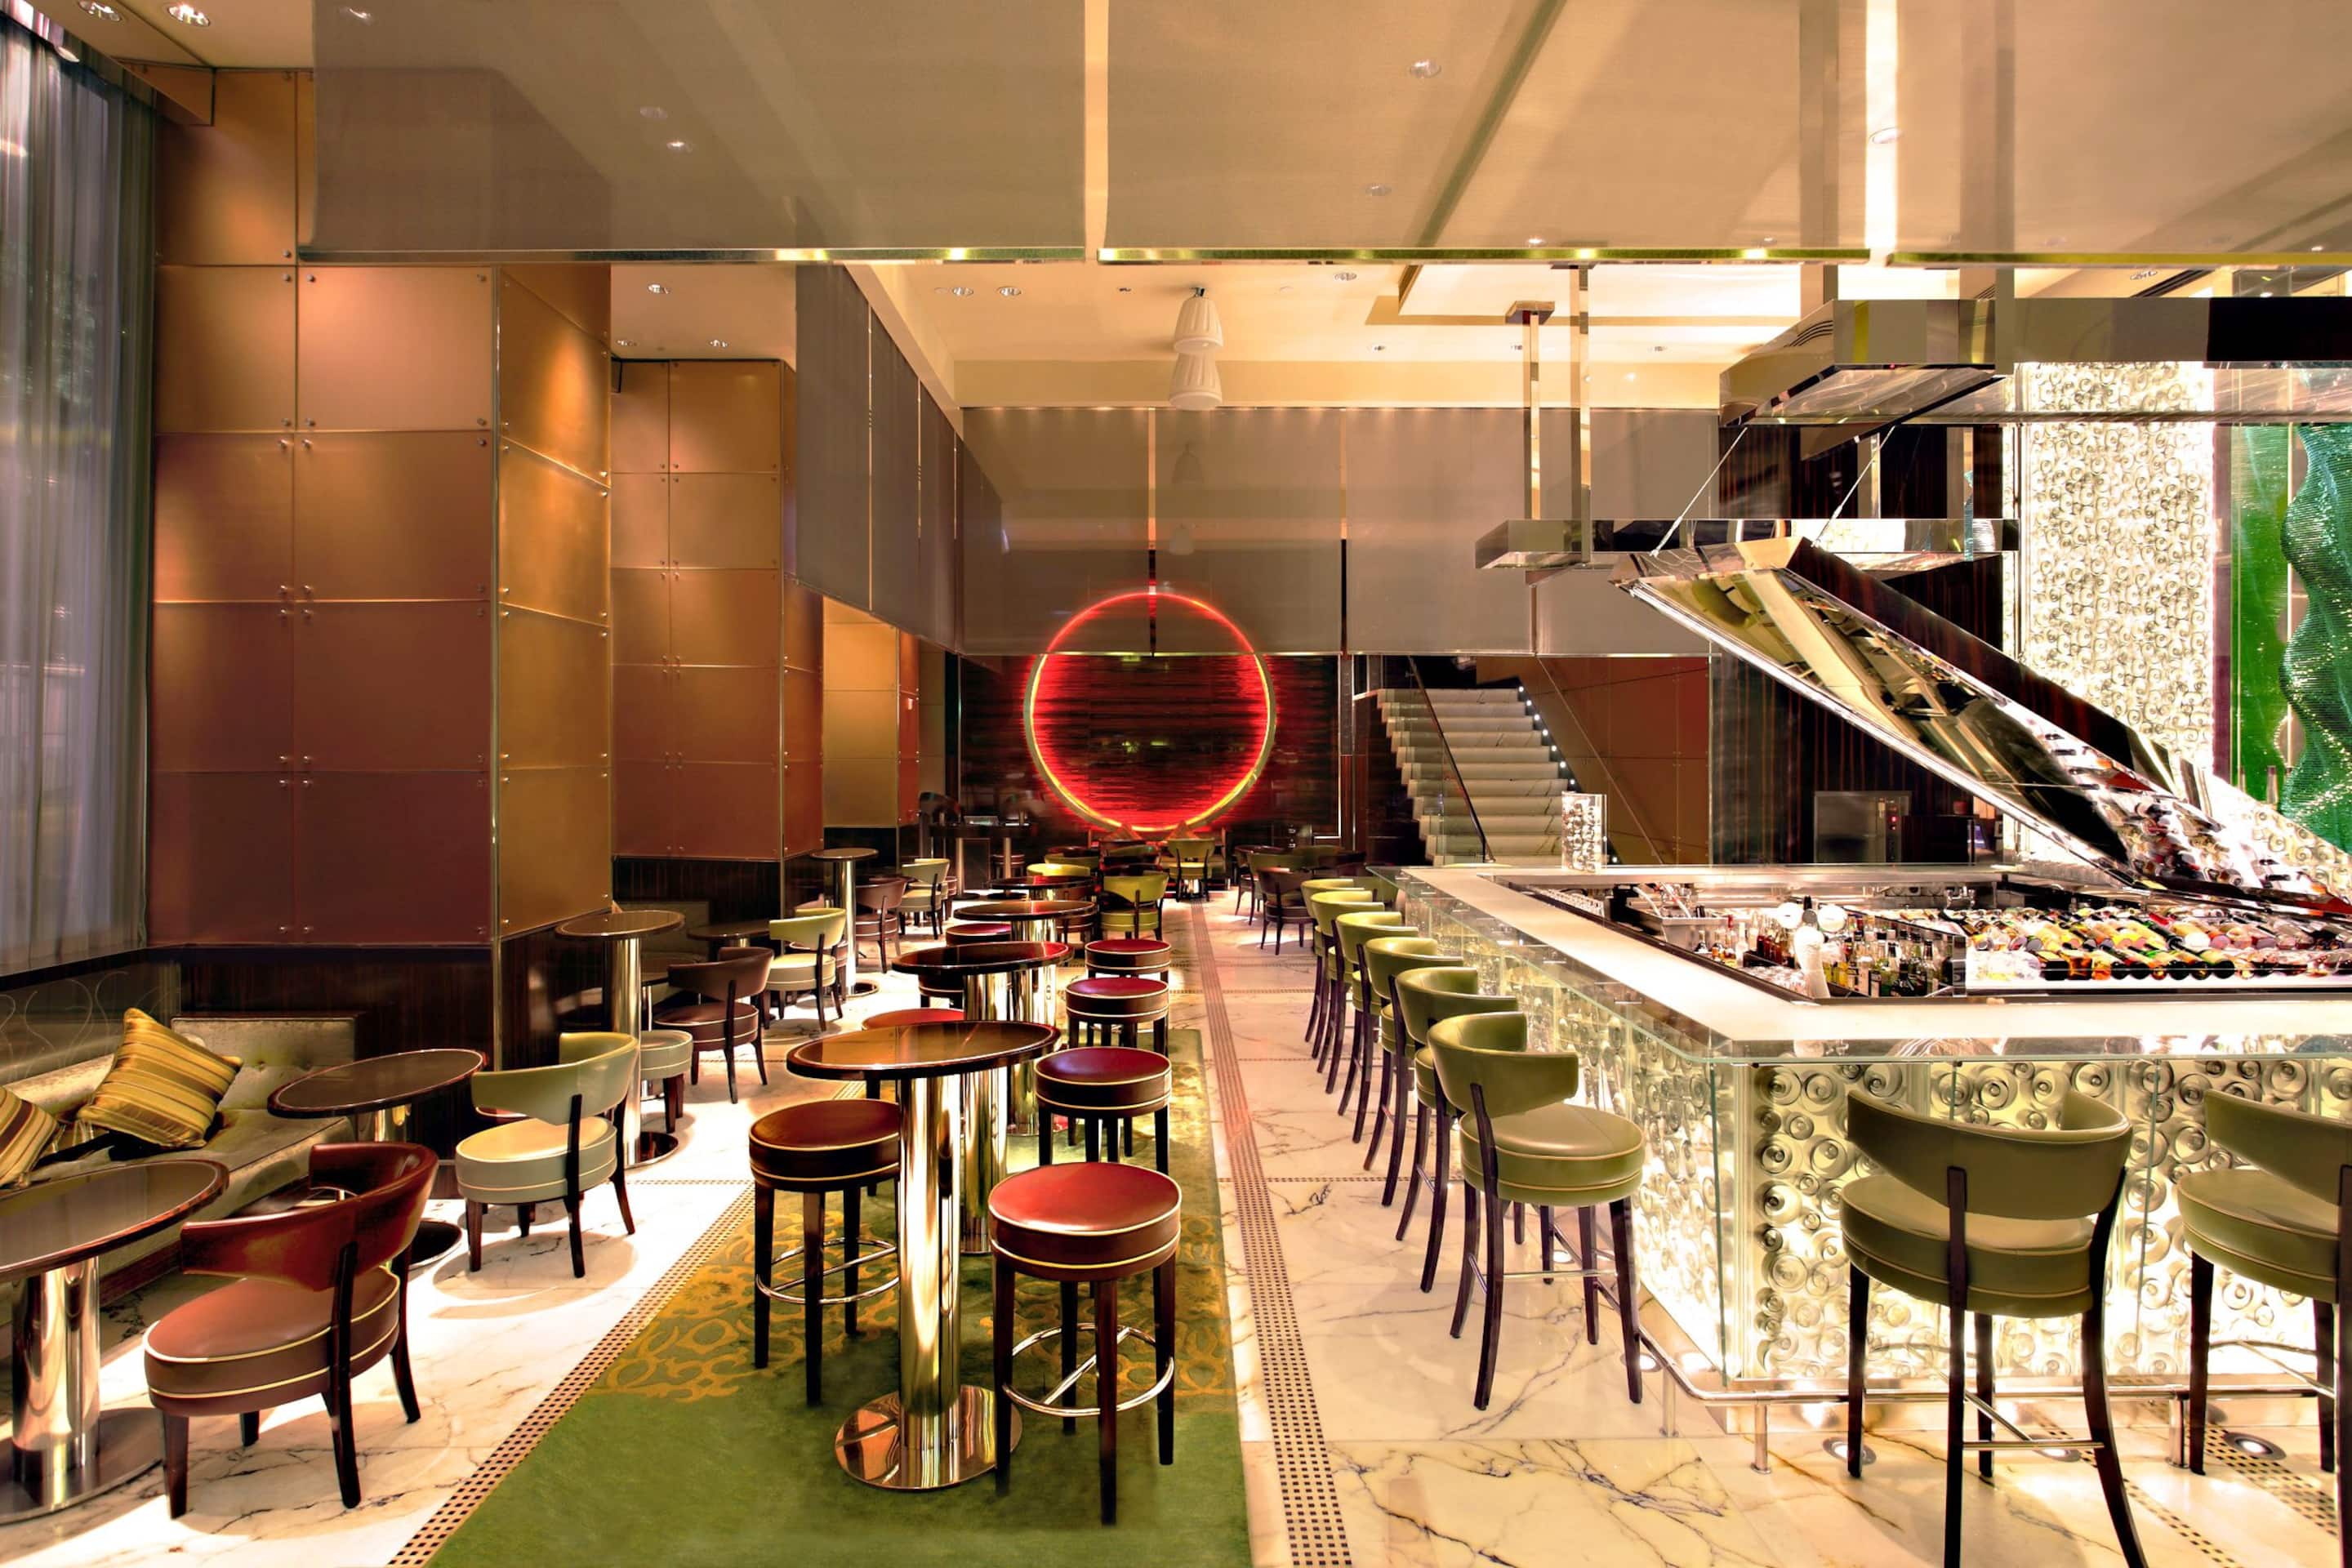 Plush furniture and the illuminated central bar inside MO Bar at The Landmark, Mandarin Oriental